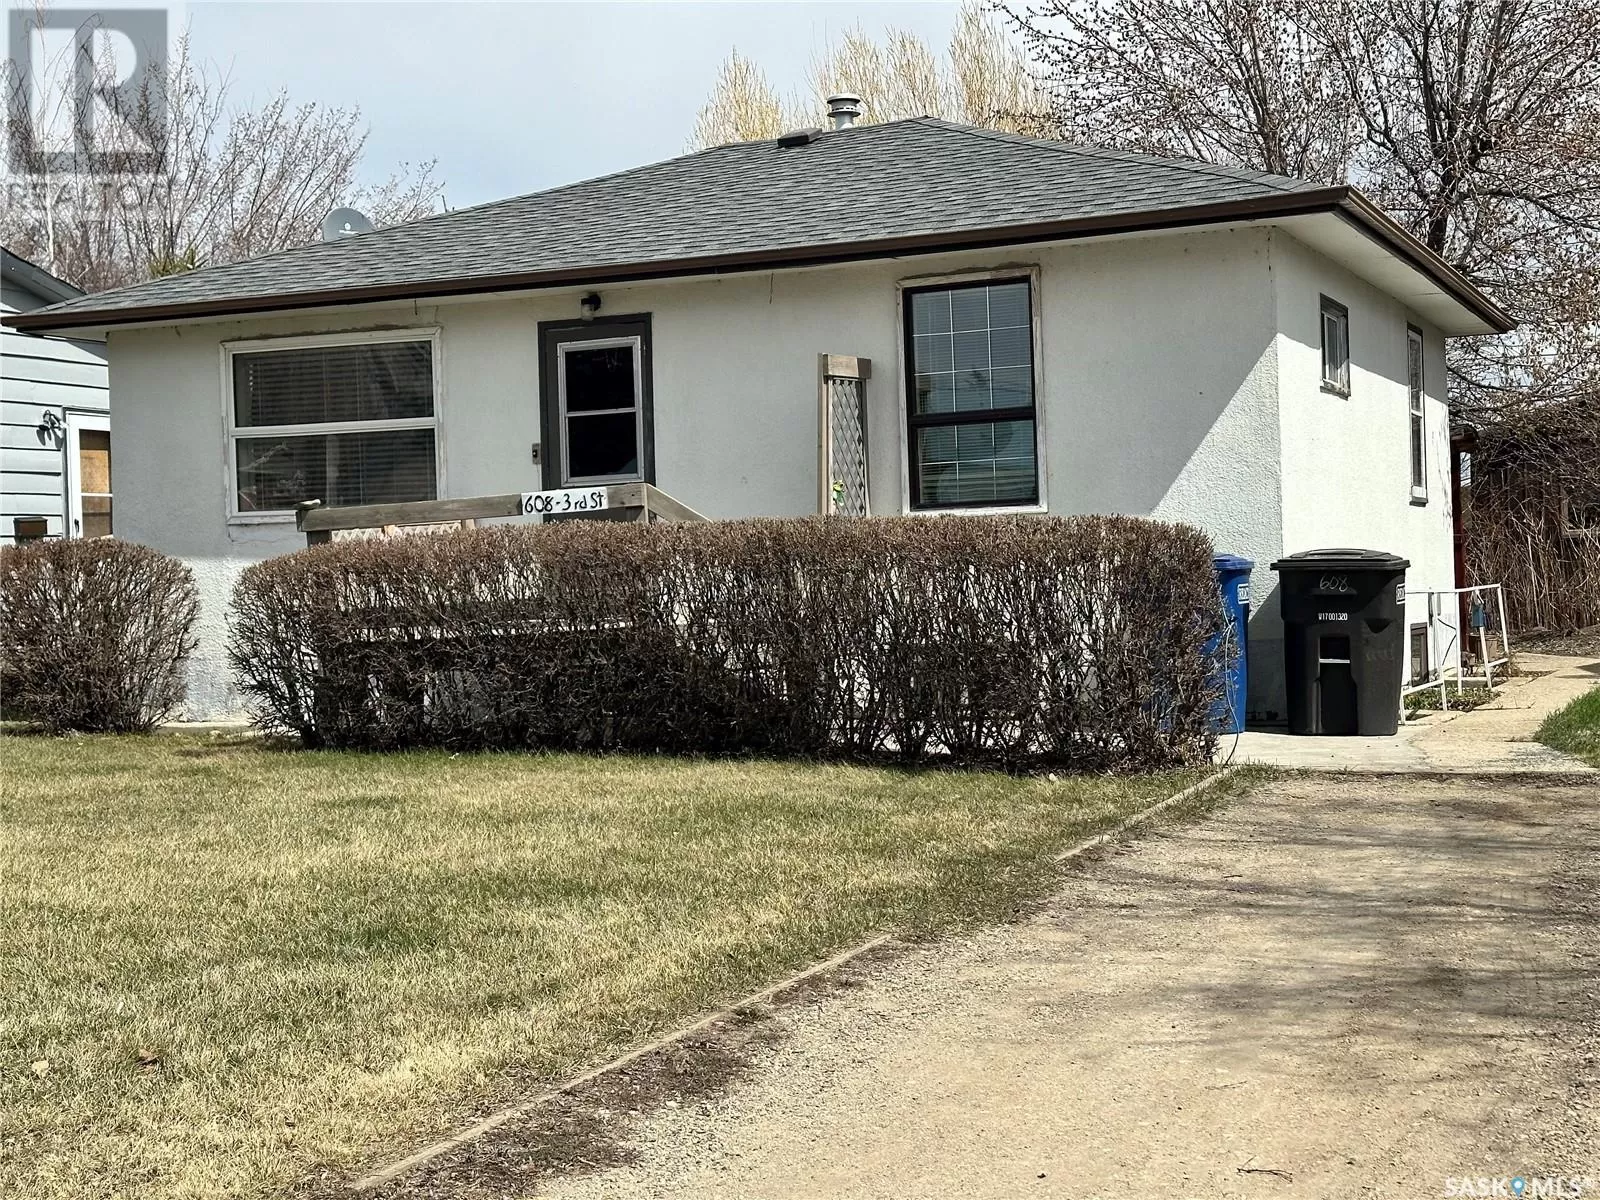 House for rent: 608 3rd Street, Humboldt, Saskatchewan S0K 2A0